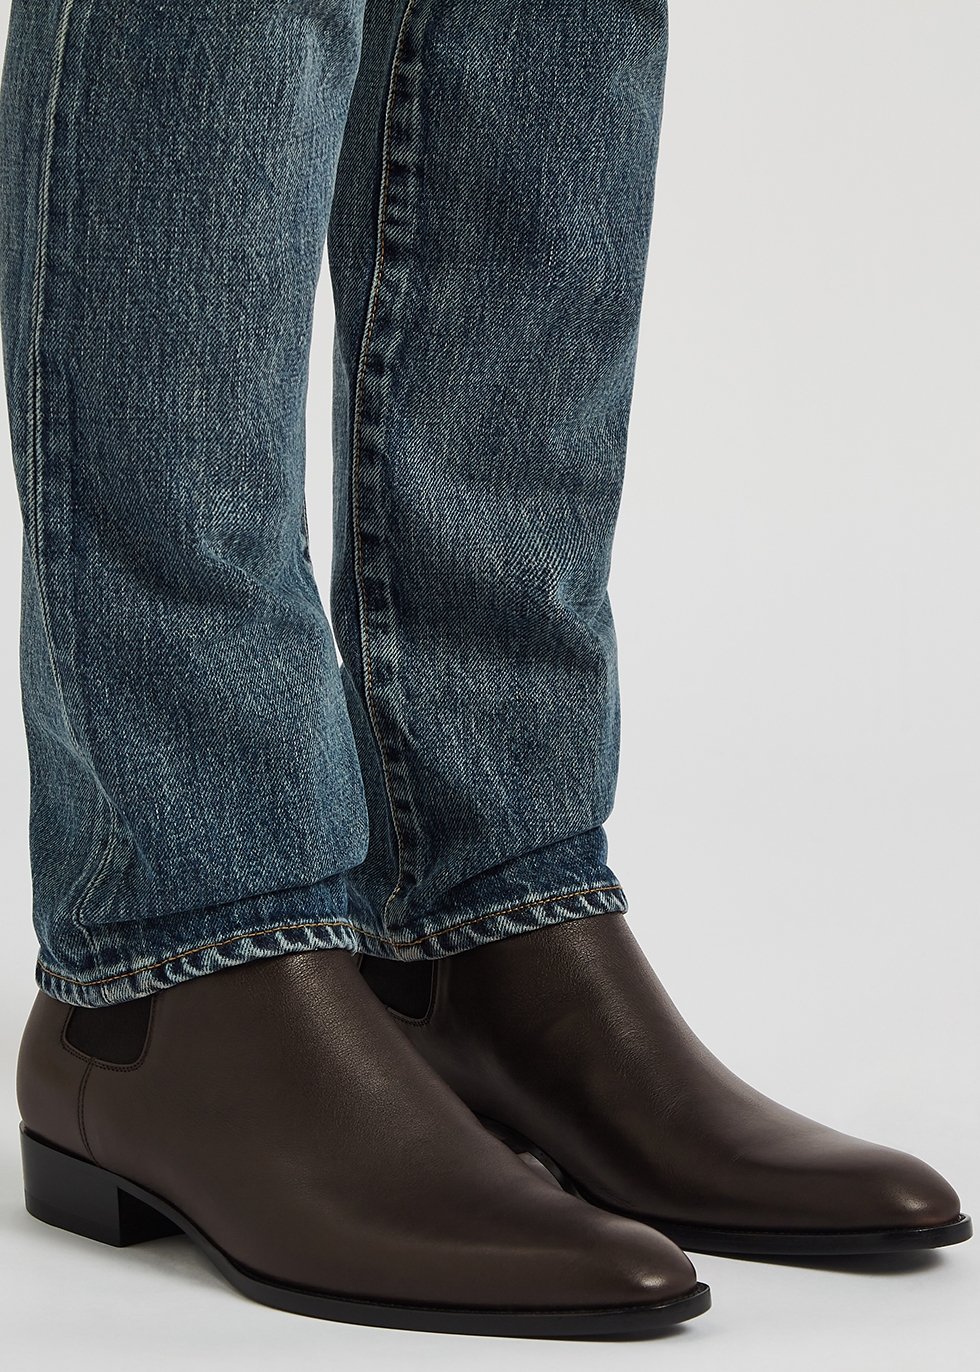 Oberst Frø civilisation Saint Laurent Wyatt dark brown leather Chelsea boots - Harvey Nichols